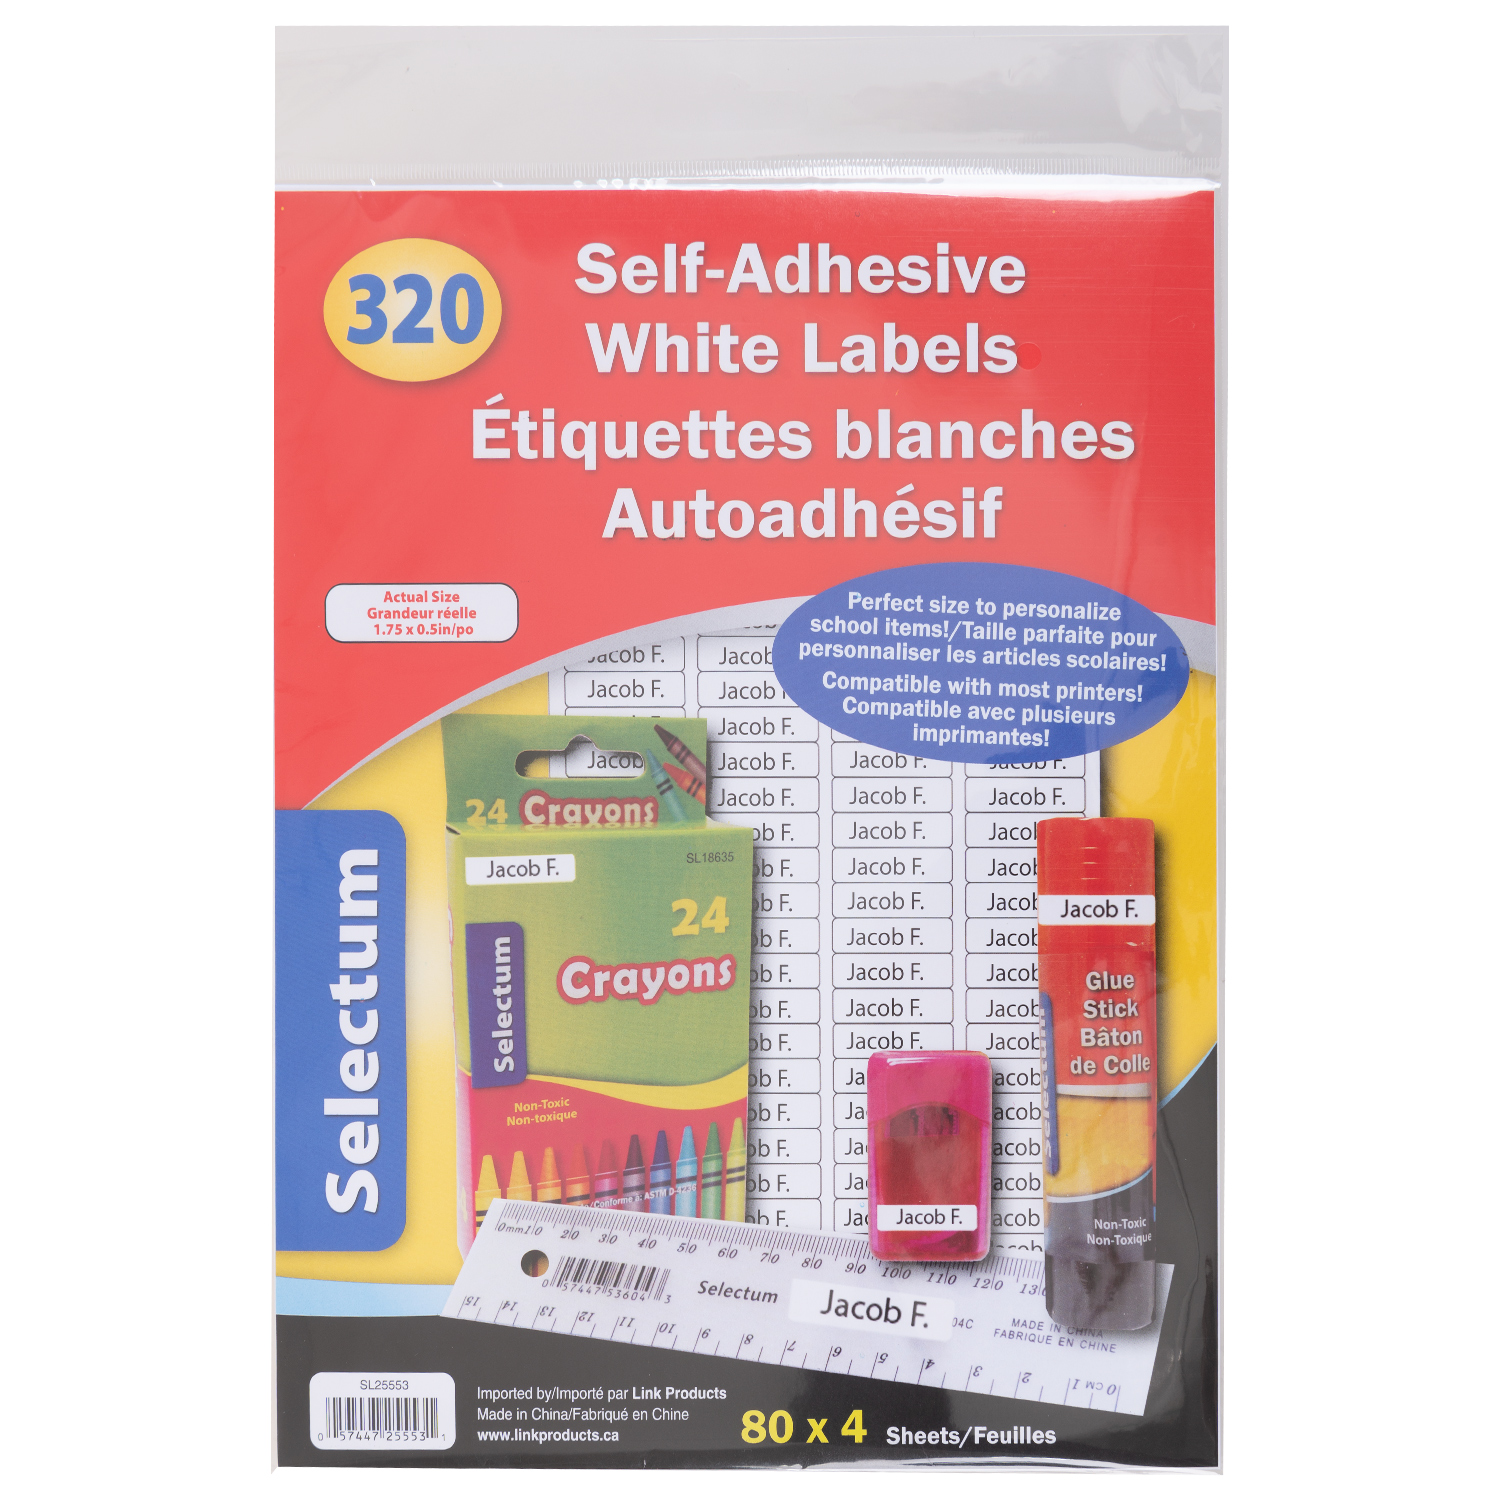 SELF Self-Adhesive Products · SELF, S.L.